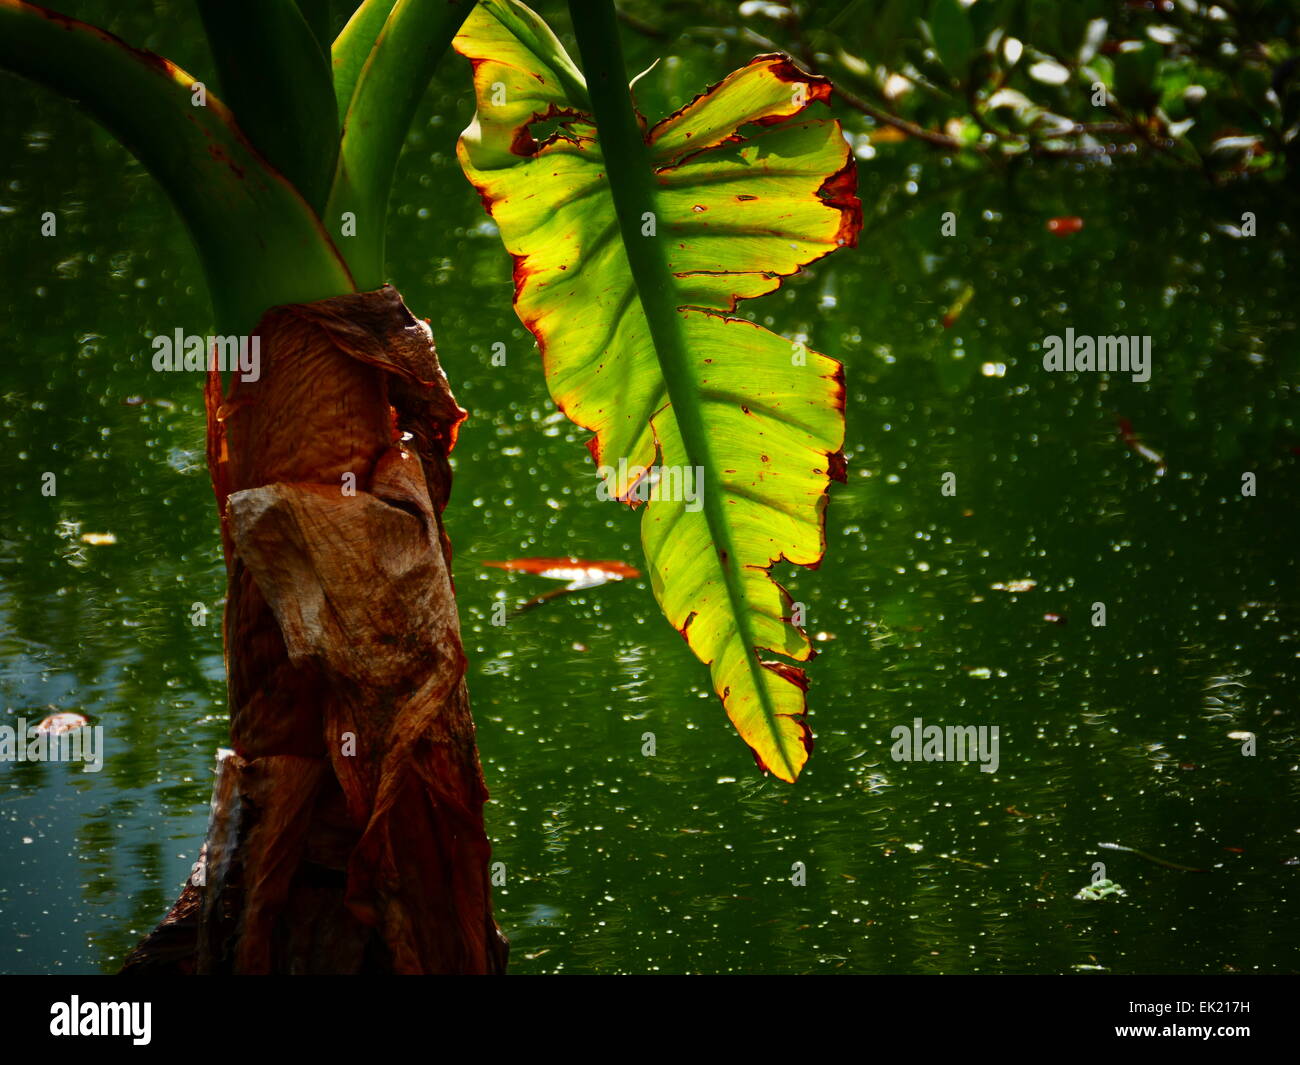 Big Banana leaf hanging above green water Stock Photo